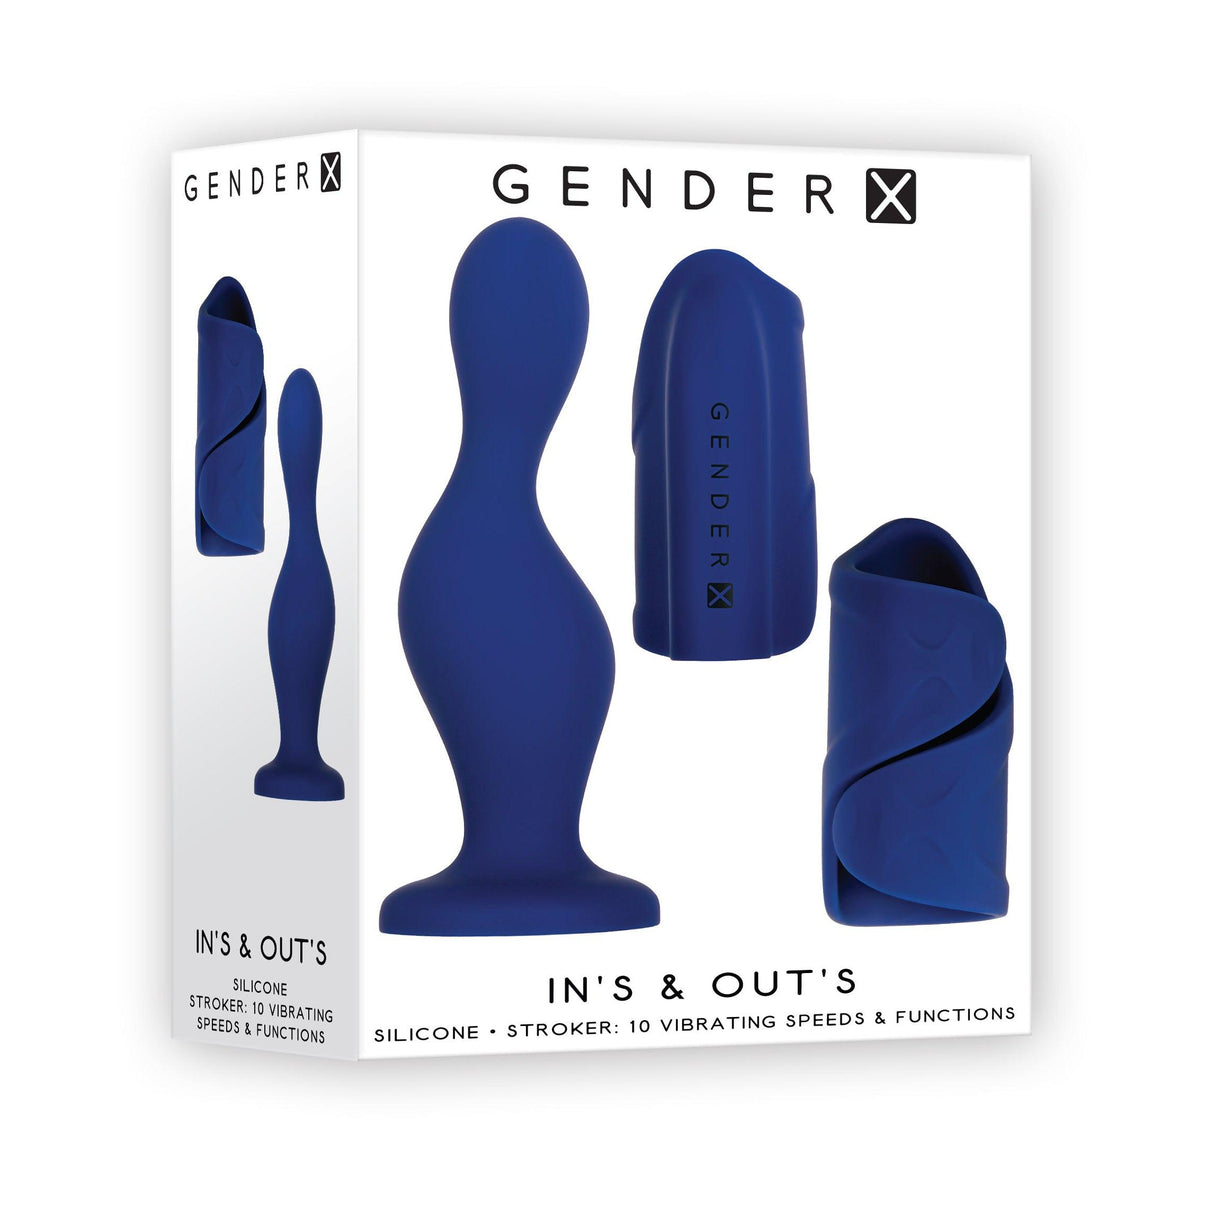 Gender X In's & Out's Vibrating Dildo & Stroker